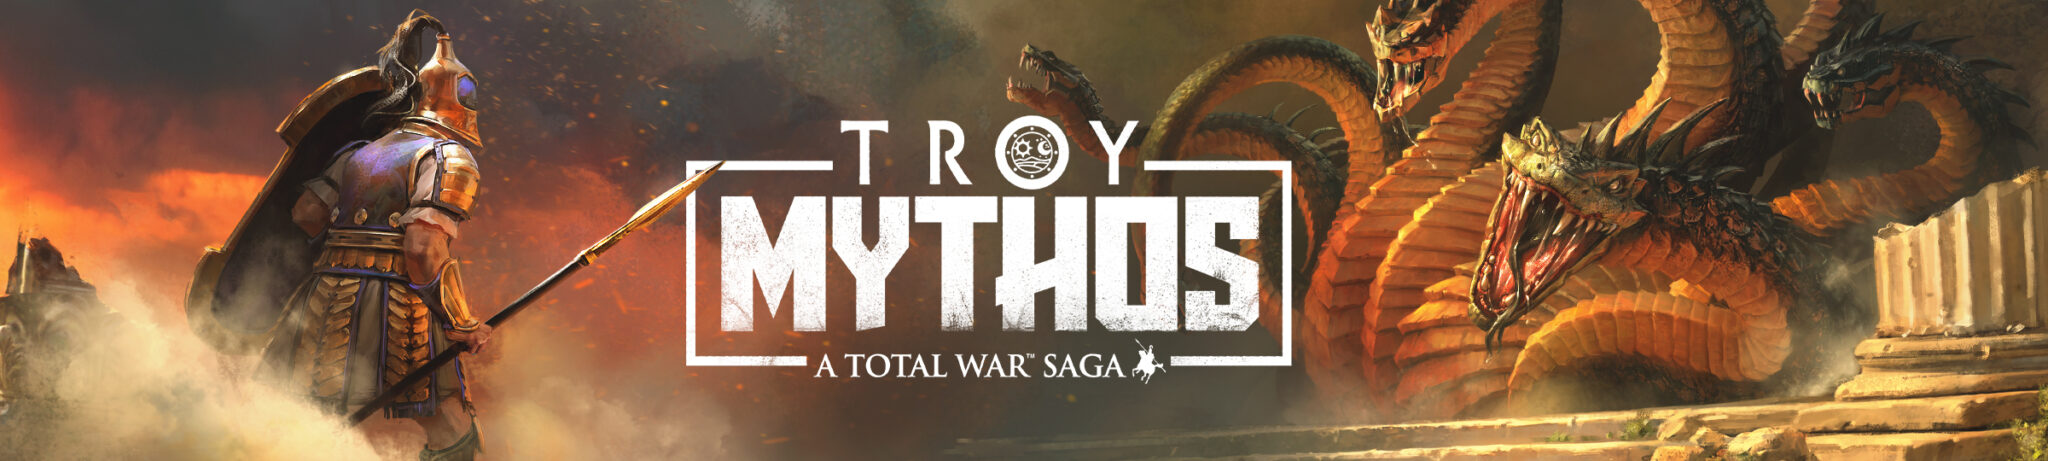 troy mythos download free